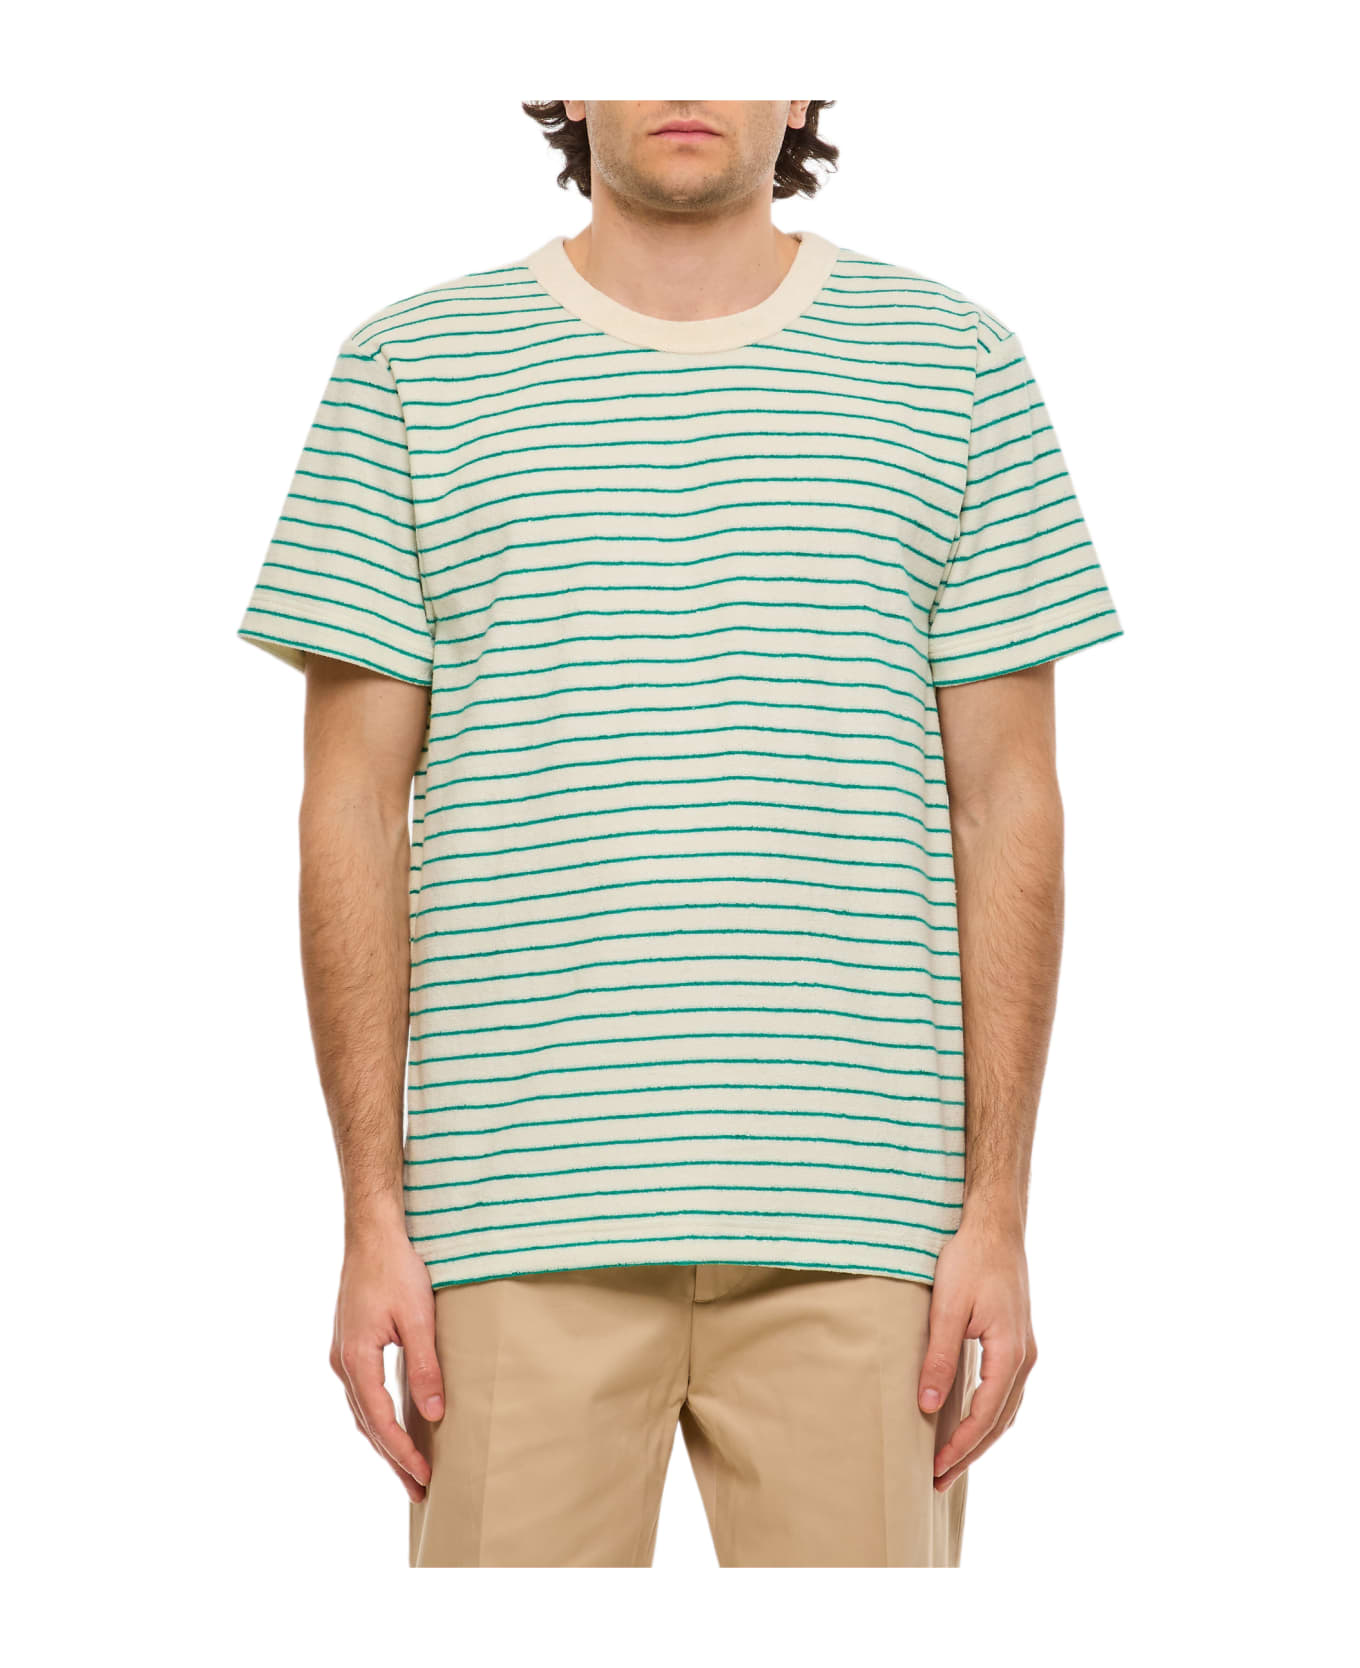 Howlin Stripes Cotton T-shirt - Green